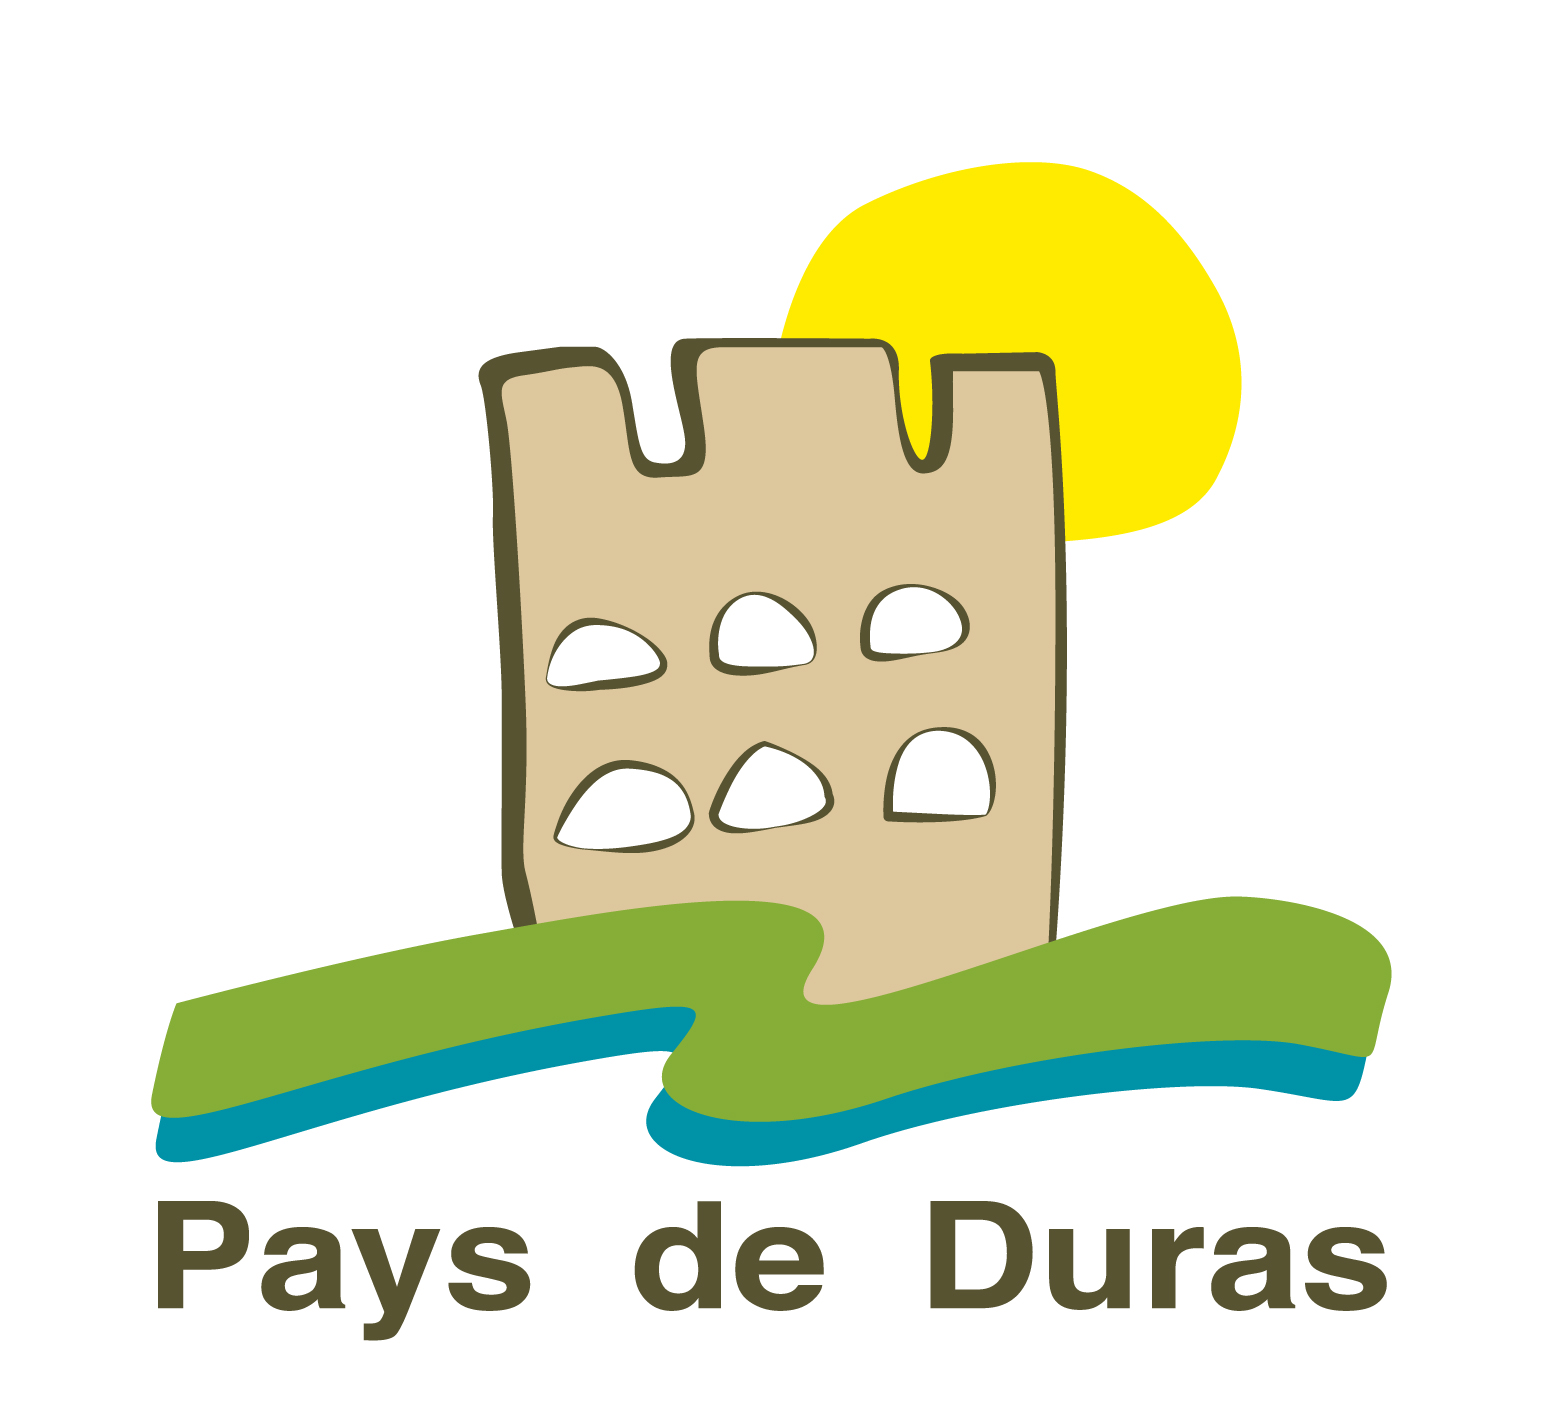 CC Pays de Duras logo.jpg